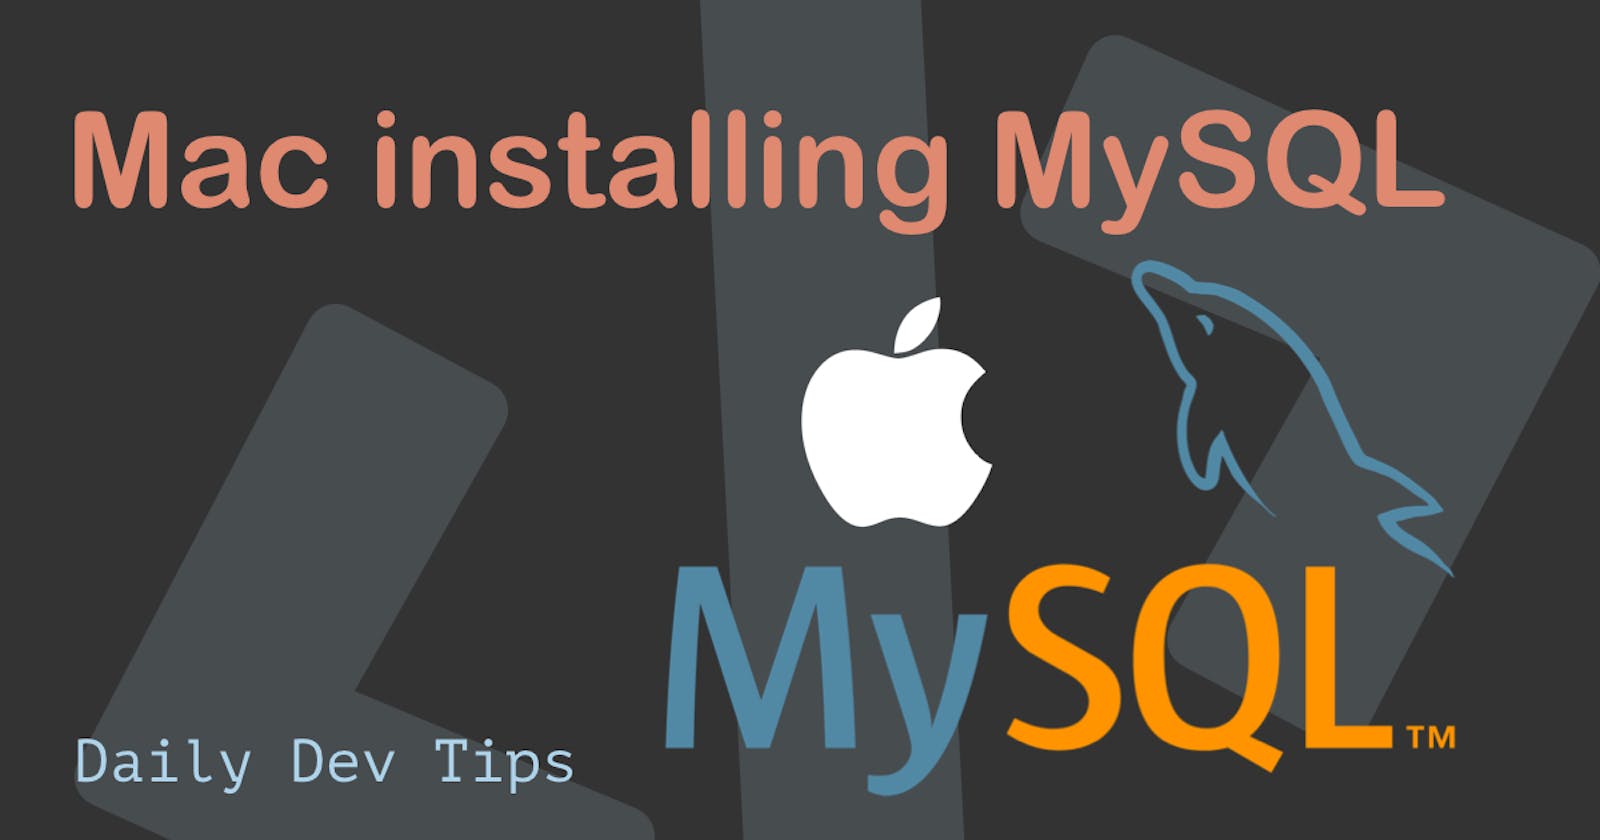 Mac installing MySQL